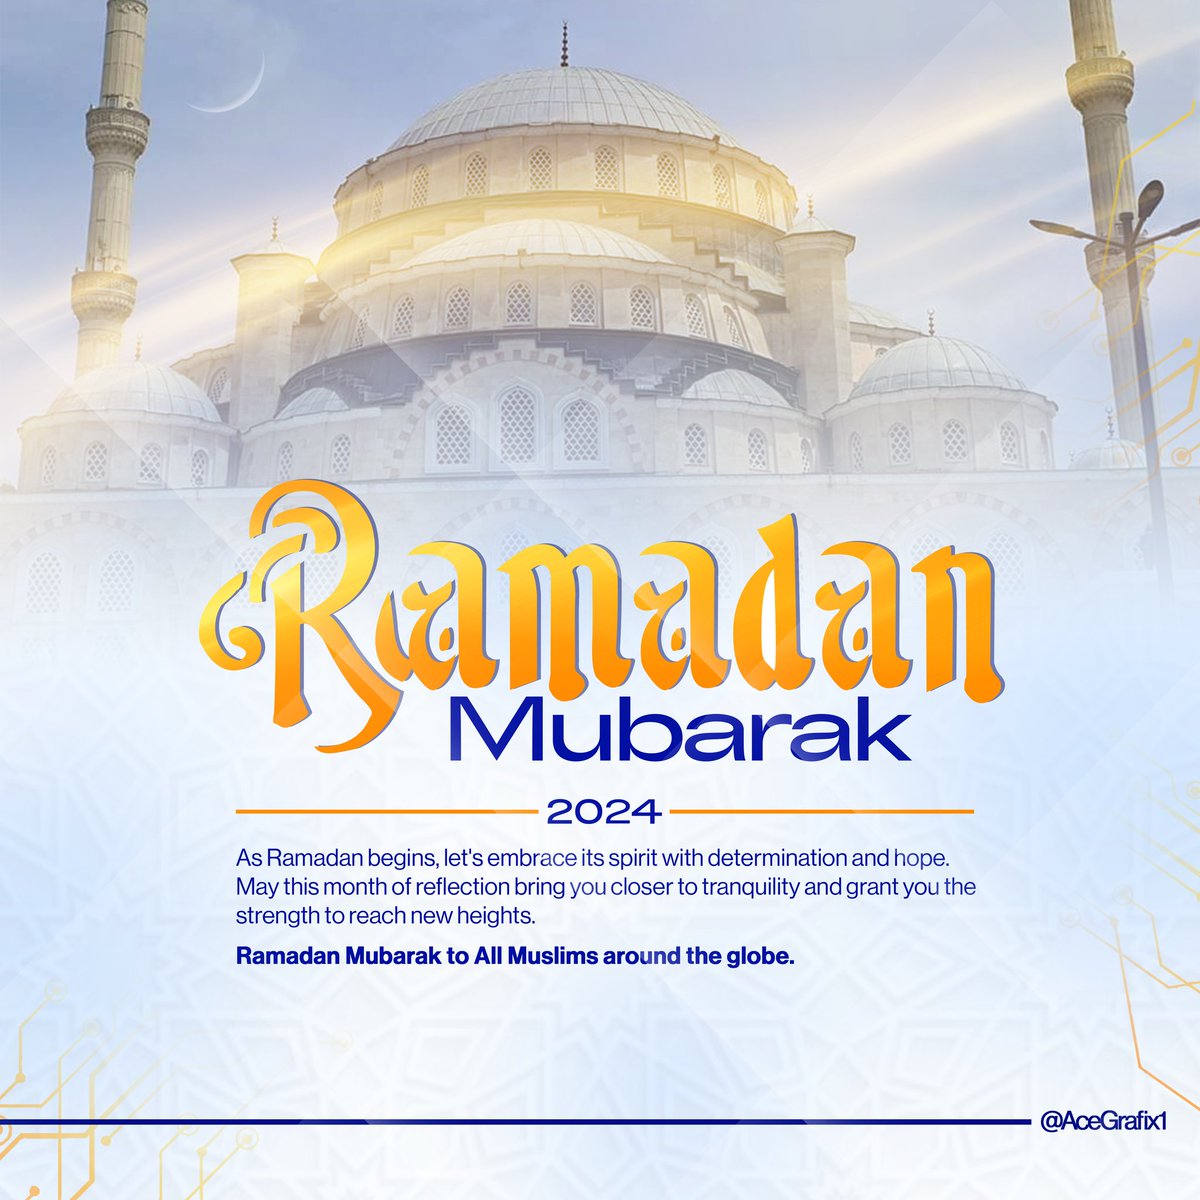 Ramadan Mubarak to all Muslims around the globe.
.
#ramadanmubarak #ramadankareem #ramadan2024 #designer #designinspiration #design #designjob #ramadan2024🌙 #designoftheday #graphics #graphicdesign #graphicdesigningjobs #flyerdigital #flyerdesign #exploretocreate #explorepage